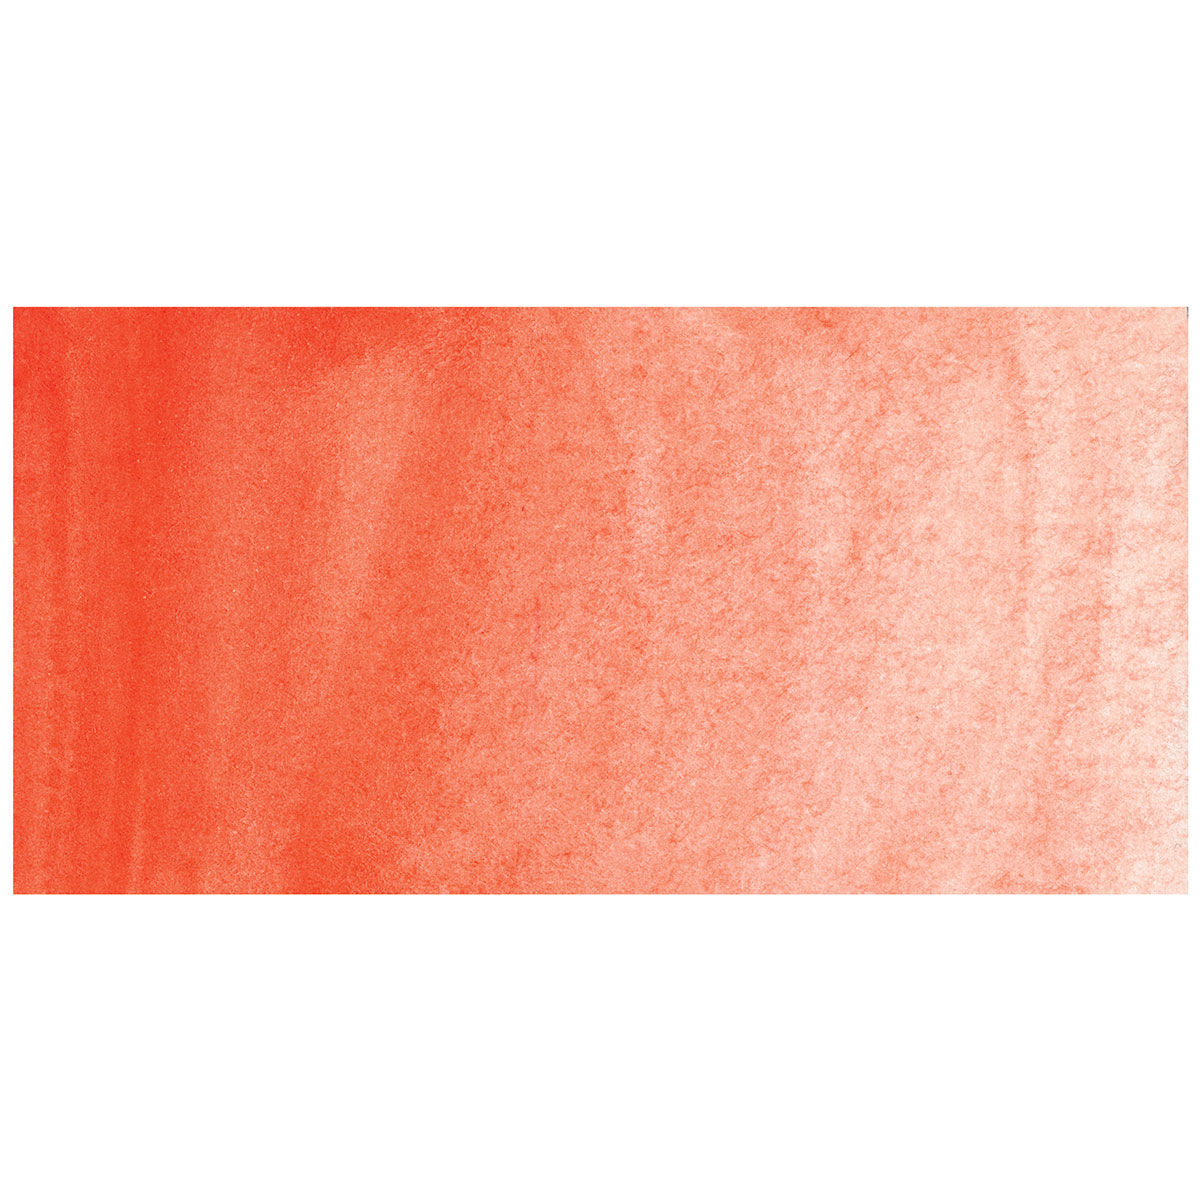 Koi Watercolor Paint Tubes 5ml set of 12 by Sakura - 084511373747